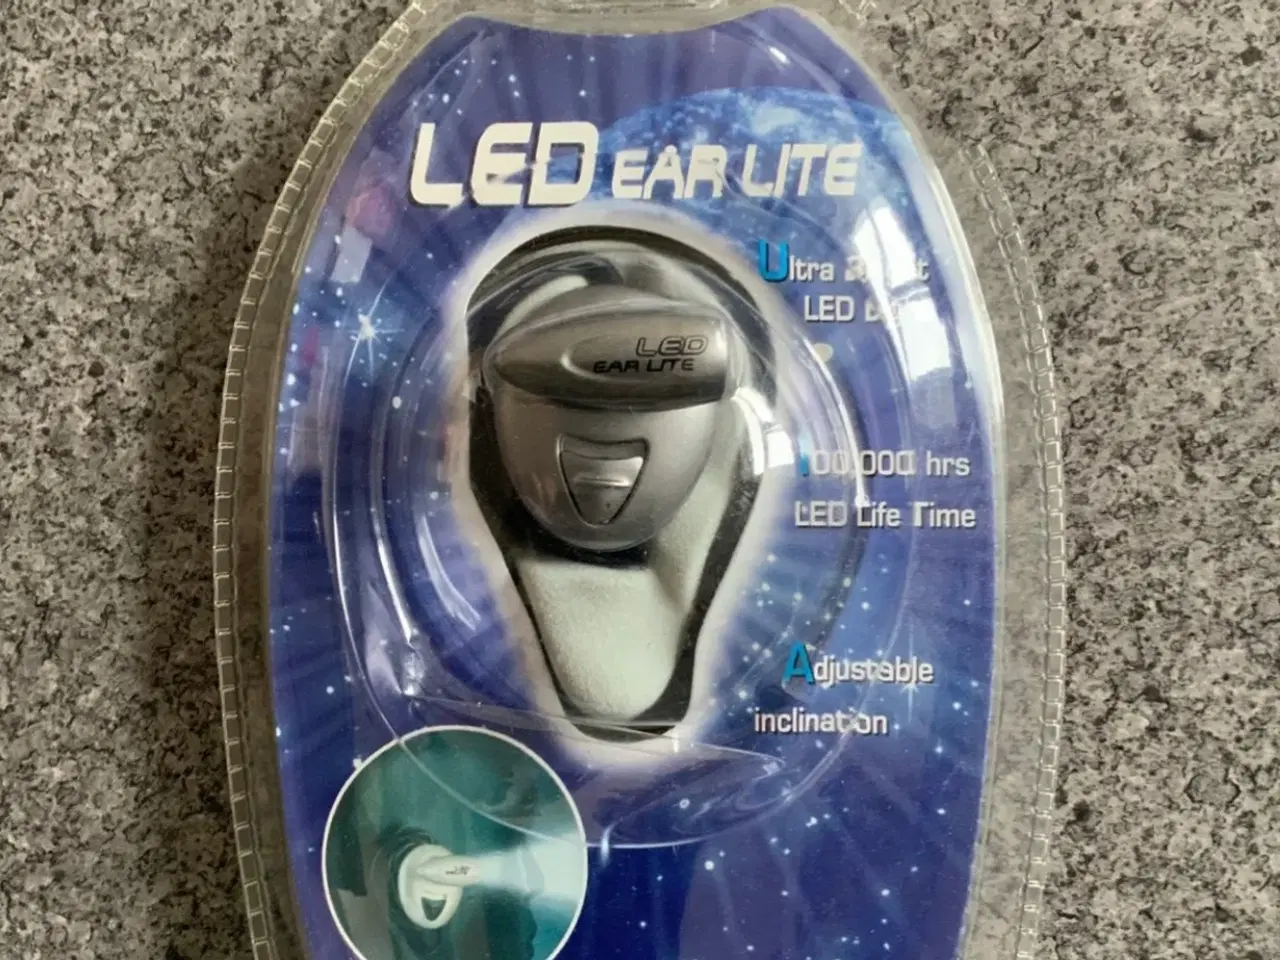 Billede 1 - LED Ear Lite